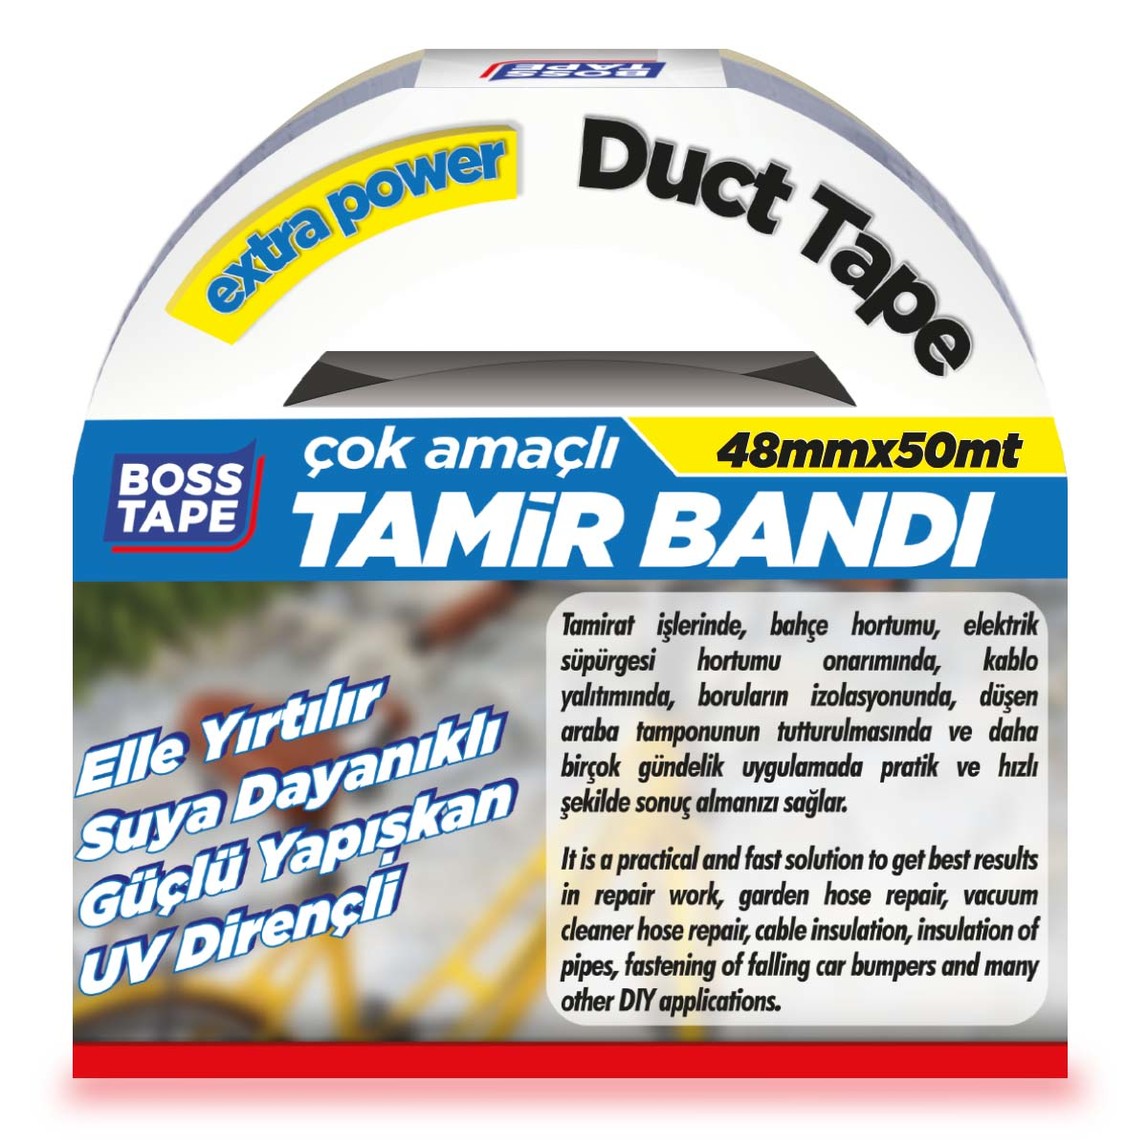    Boss Tape Gri Duck Tape Tamir Bandı 